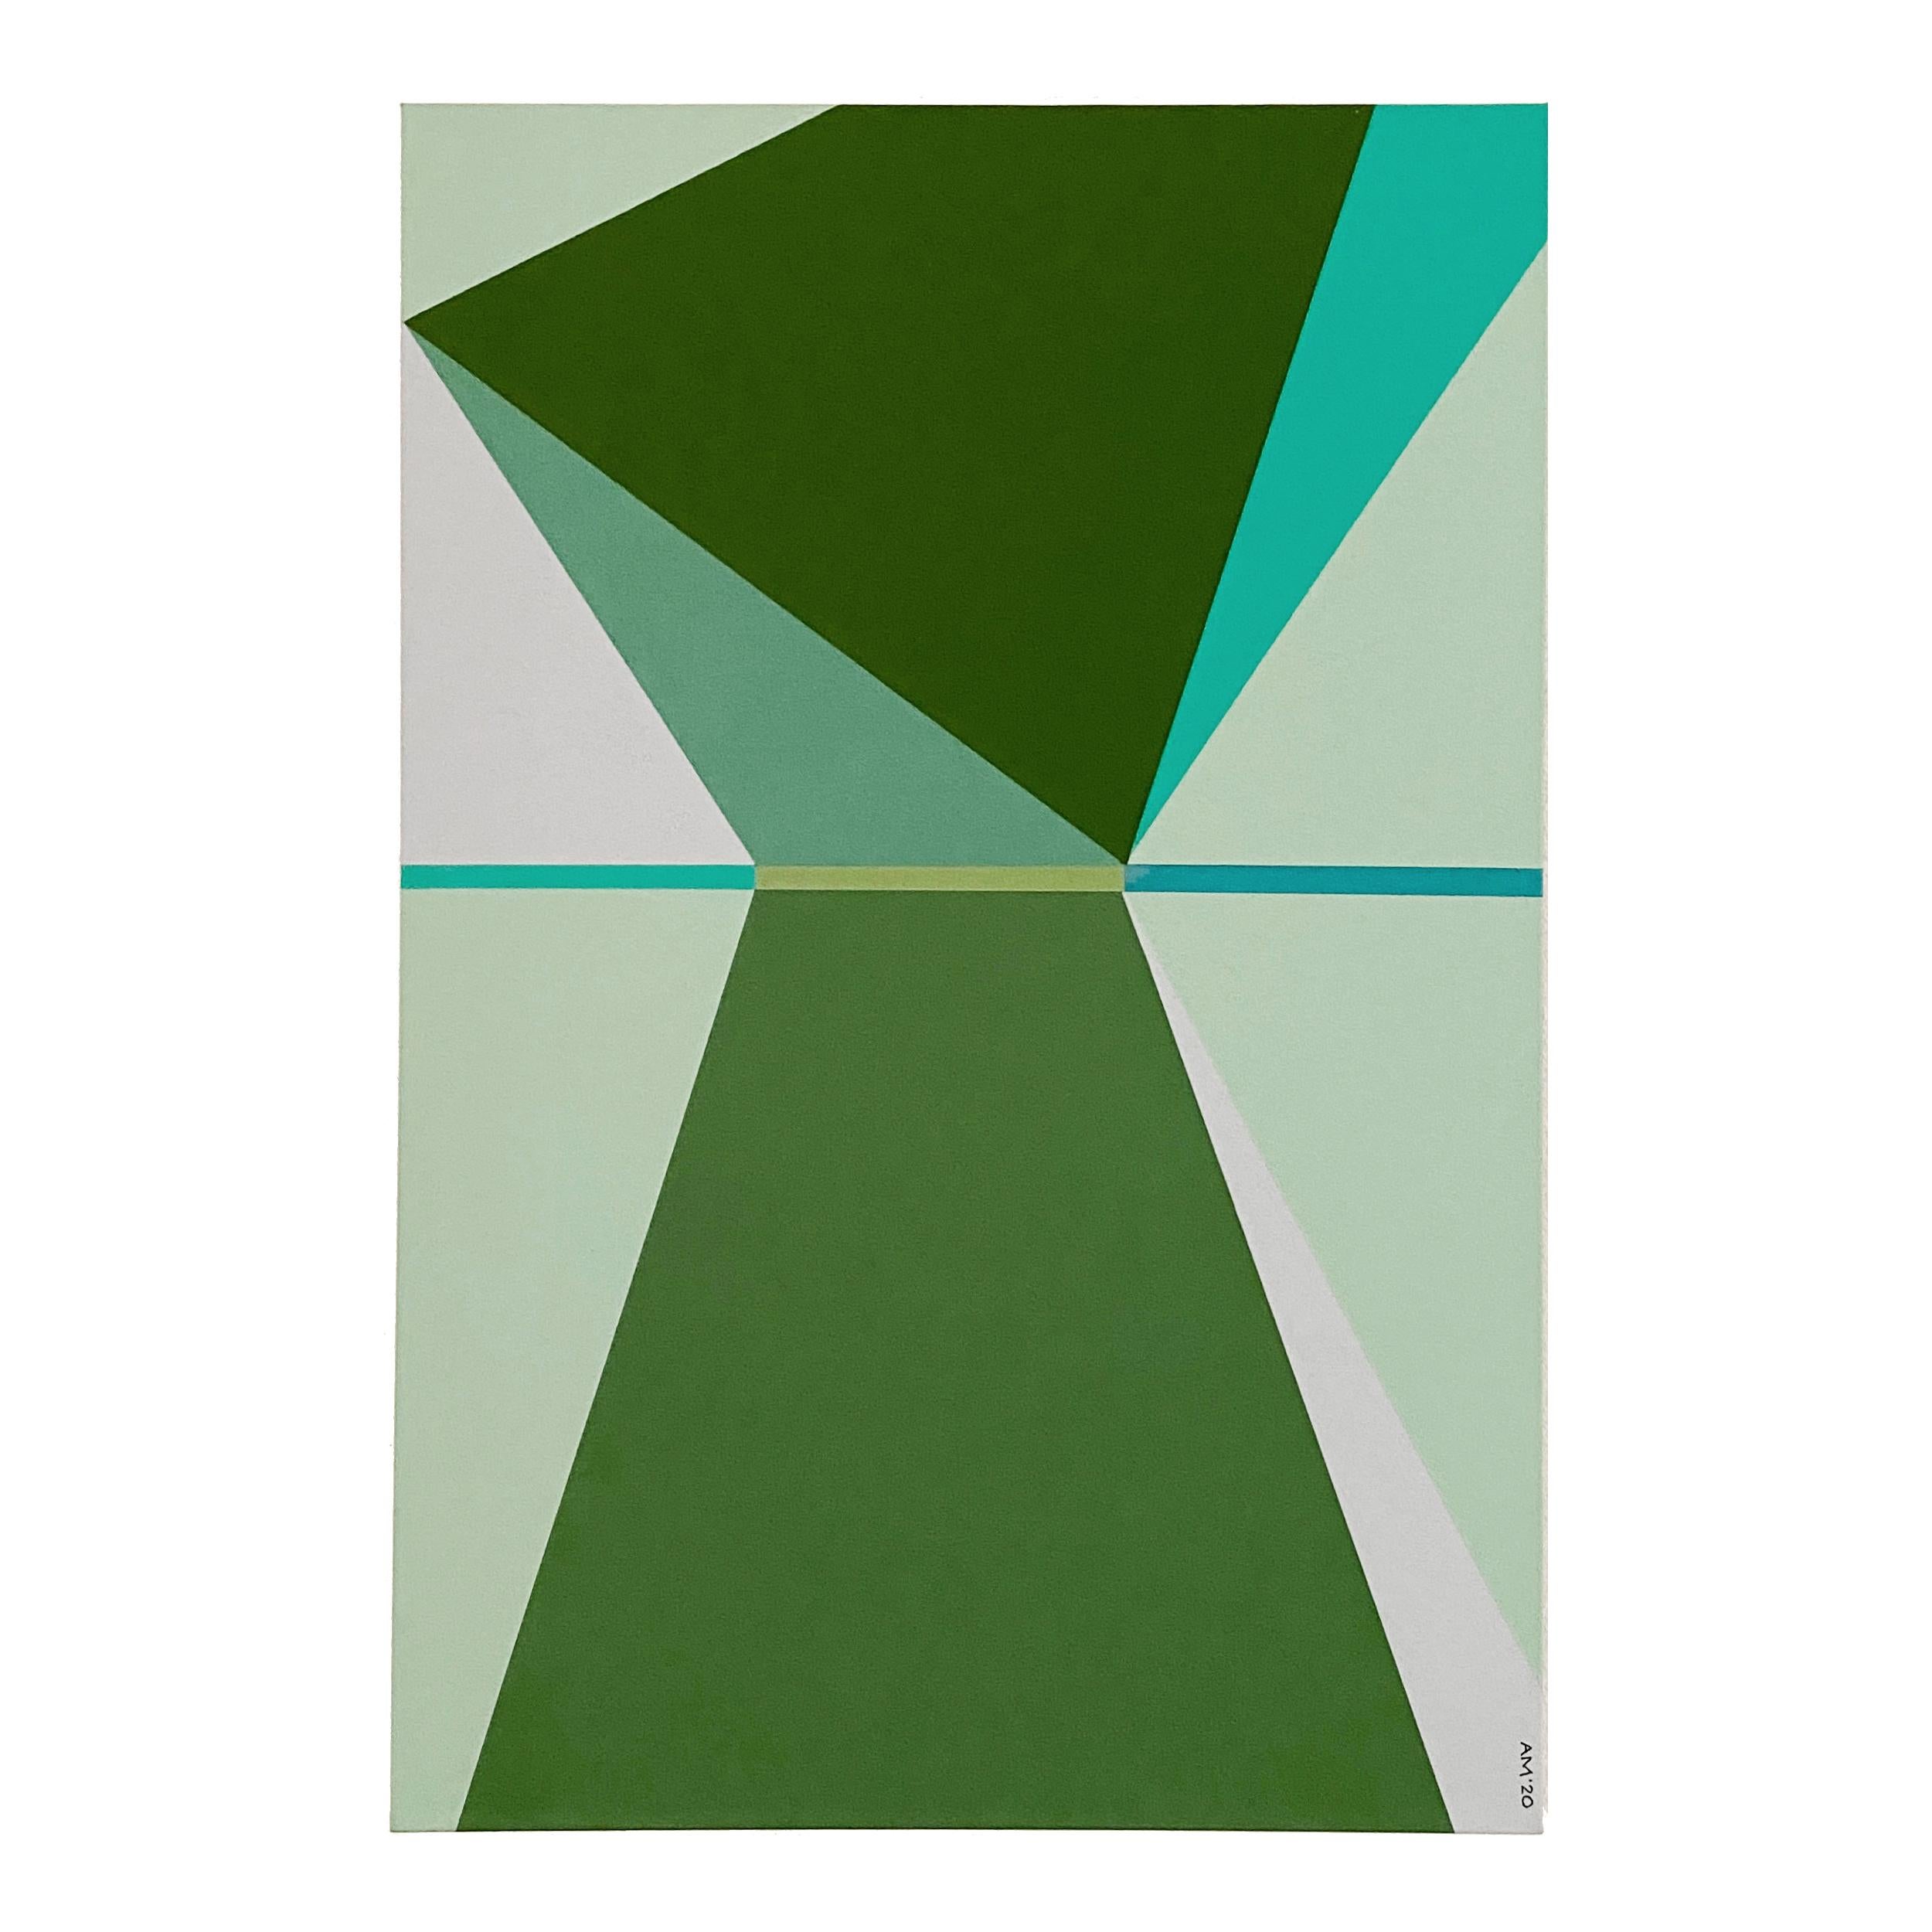 Andrew Mandolene
”Green Garden”
Acrylic on canvas
Unframed
Dimensions:
24